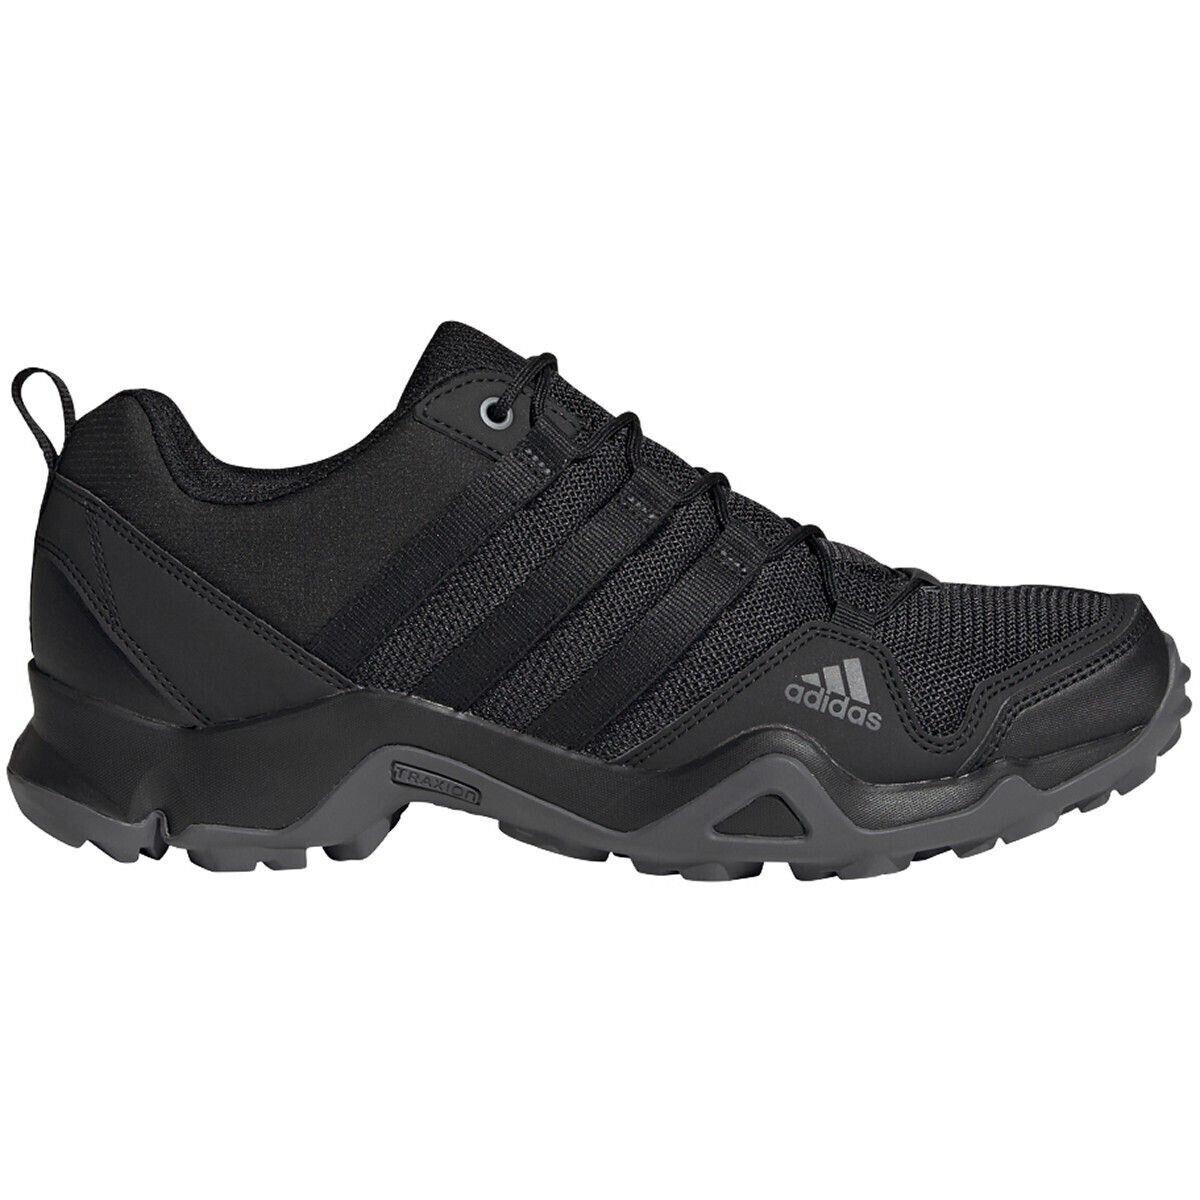 Adidas AX2S Men s Hiking Shoes Sz 10 Sneakers Black / Dark Grey 587